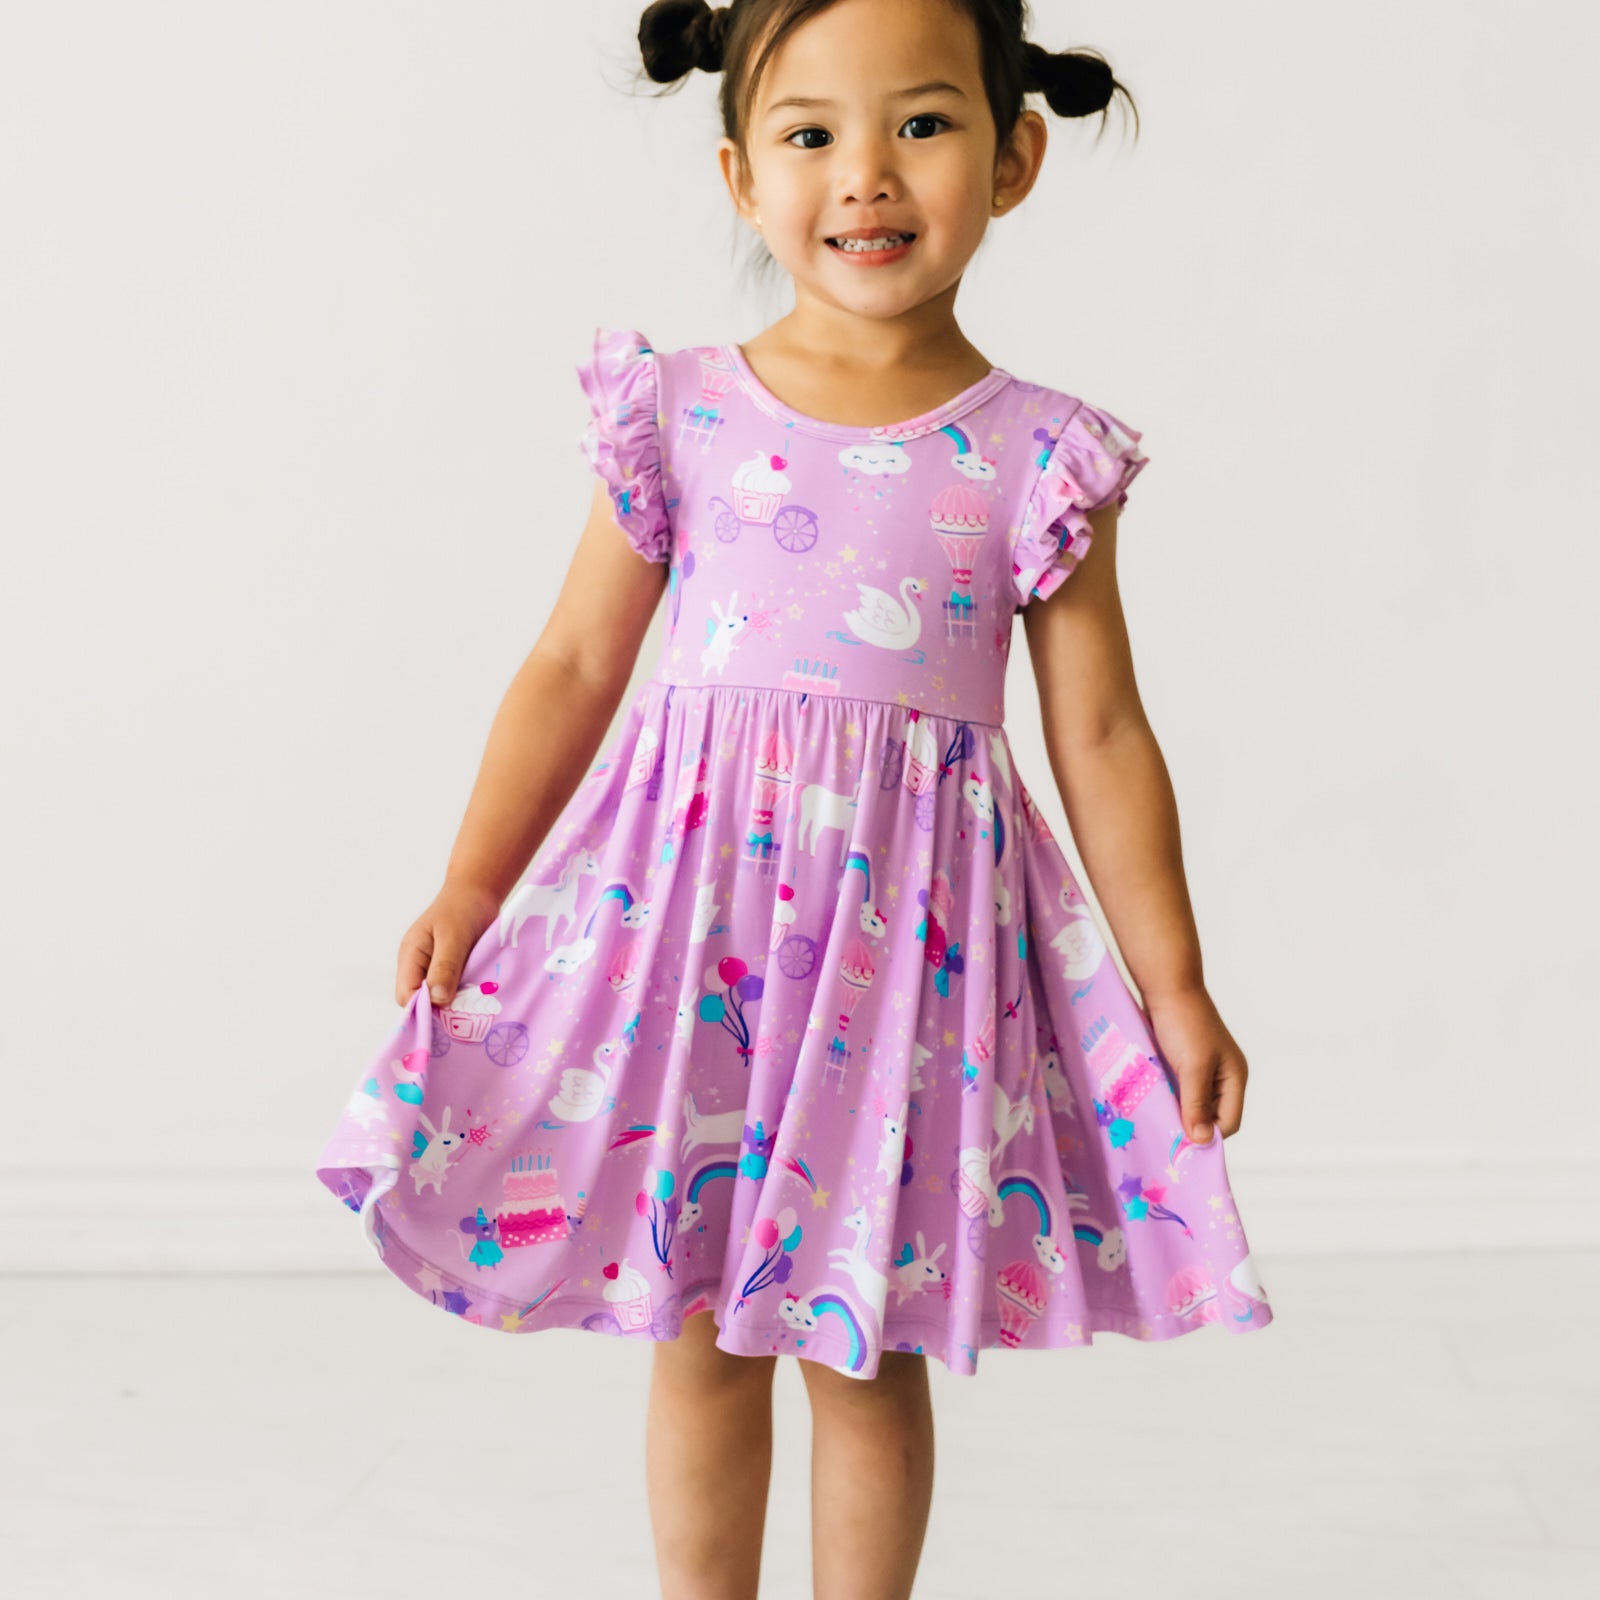 Child posing wearing a Magical Birthday Flutter twirl dress